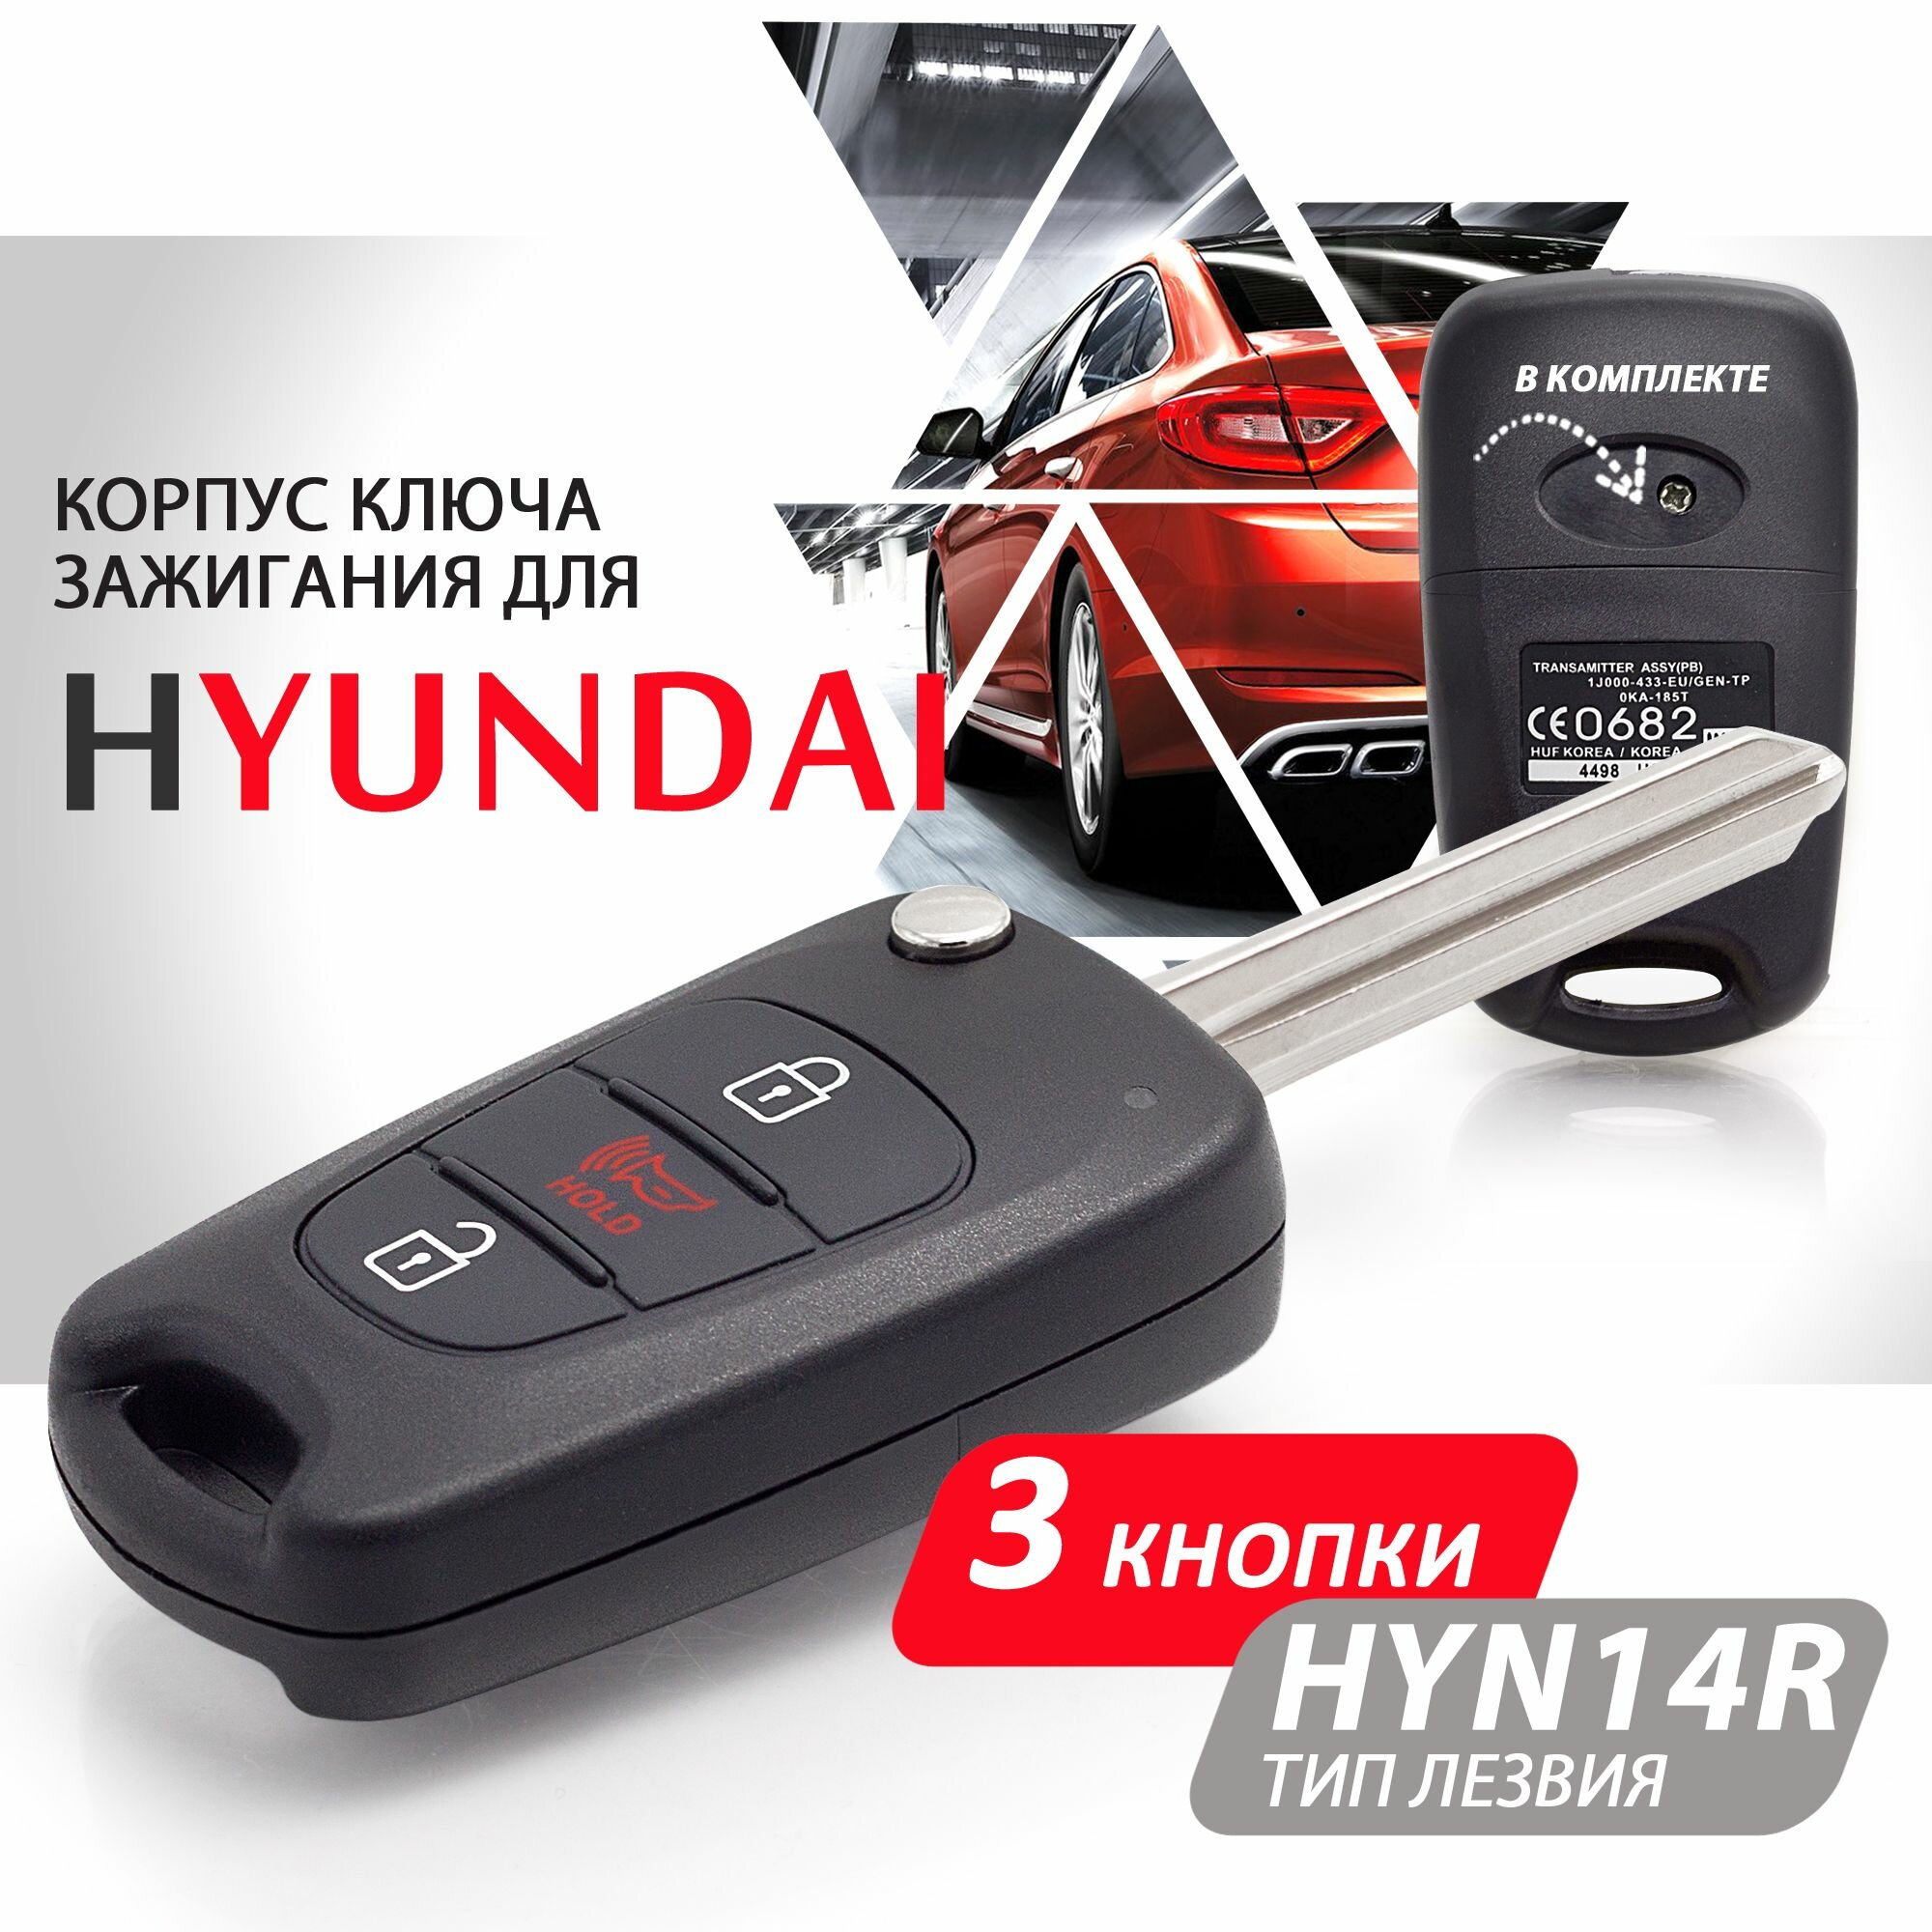 Корпус ключа зажигания для Hyundai Solaris Elantra Accent ix35 ix20 i20 i30 i40 / Хендай Солярис Элантра Акцент - 1 штука (3х кнопочный ключ, с Panic) лезвие HYN14R